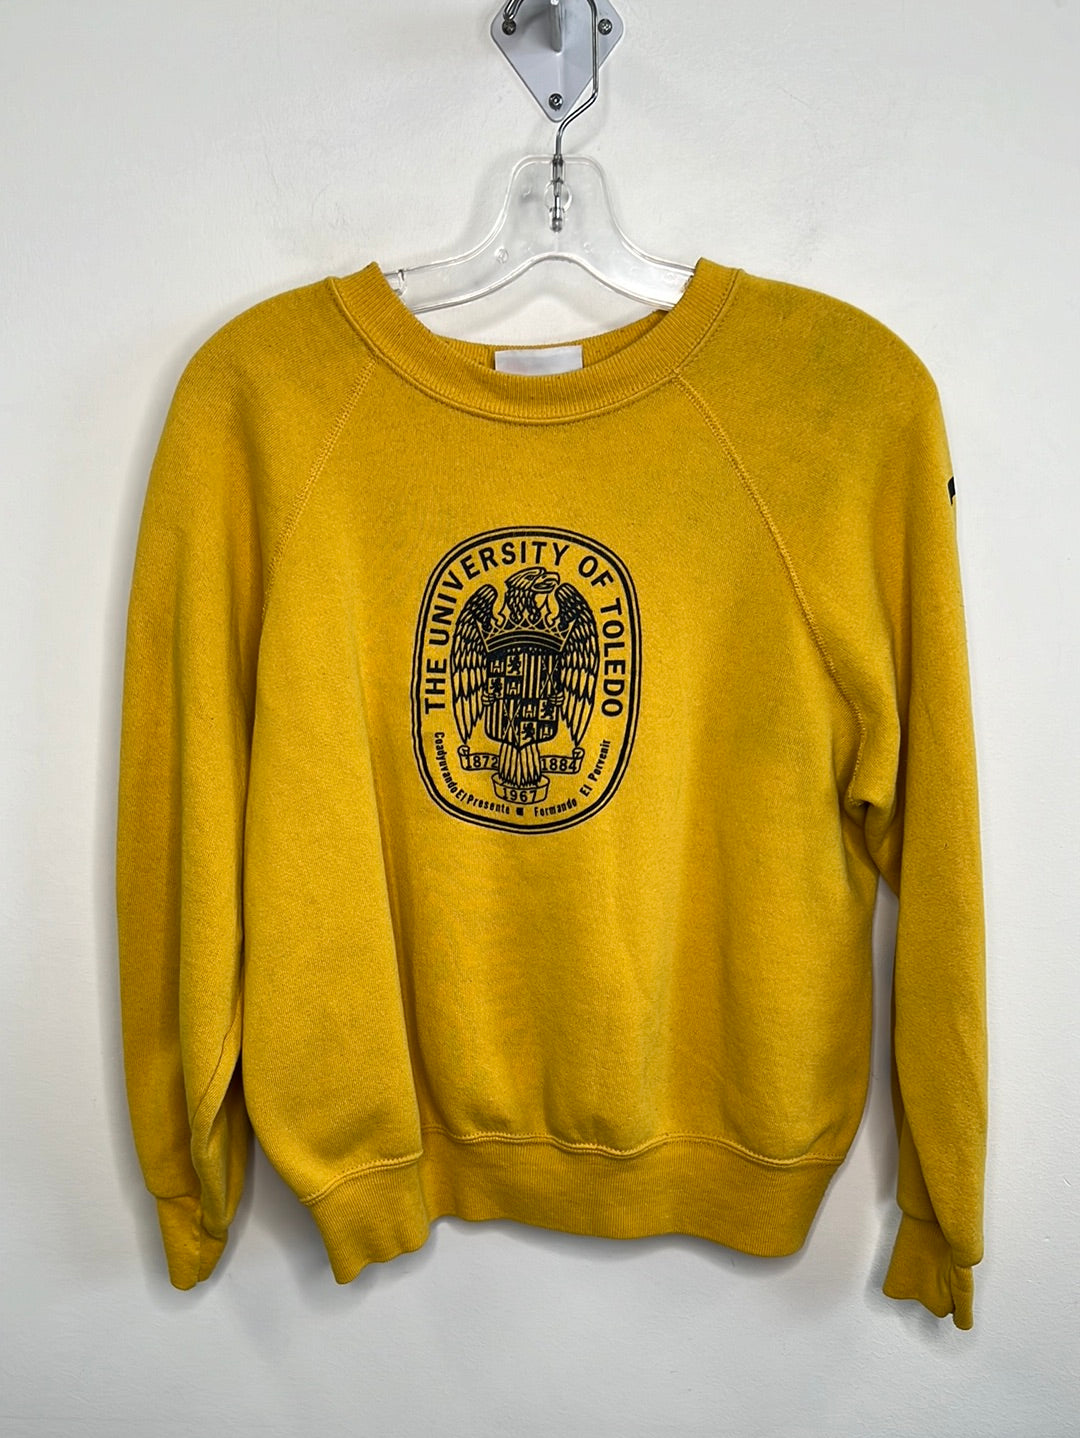 Vintage Bassett-Walker University of Toledo Crewneck Sweatshirt (L)